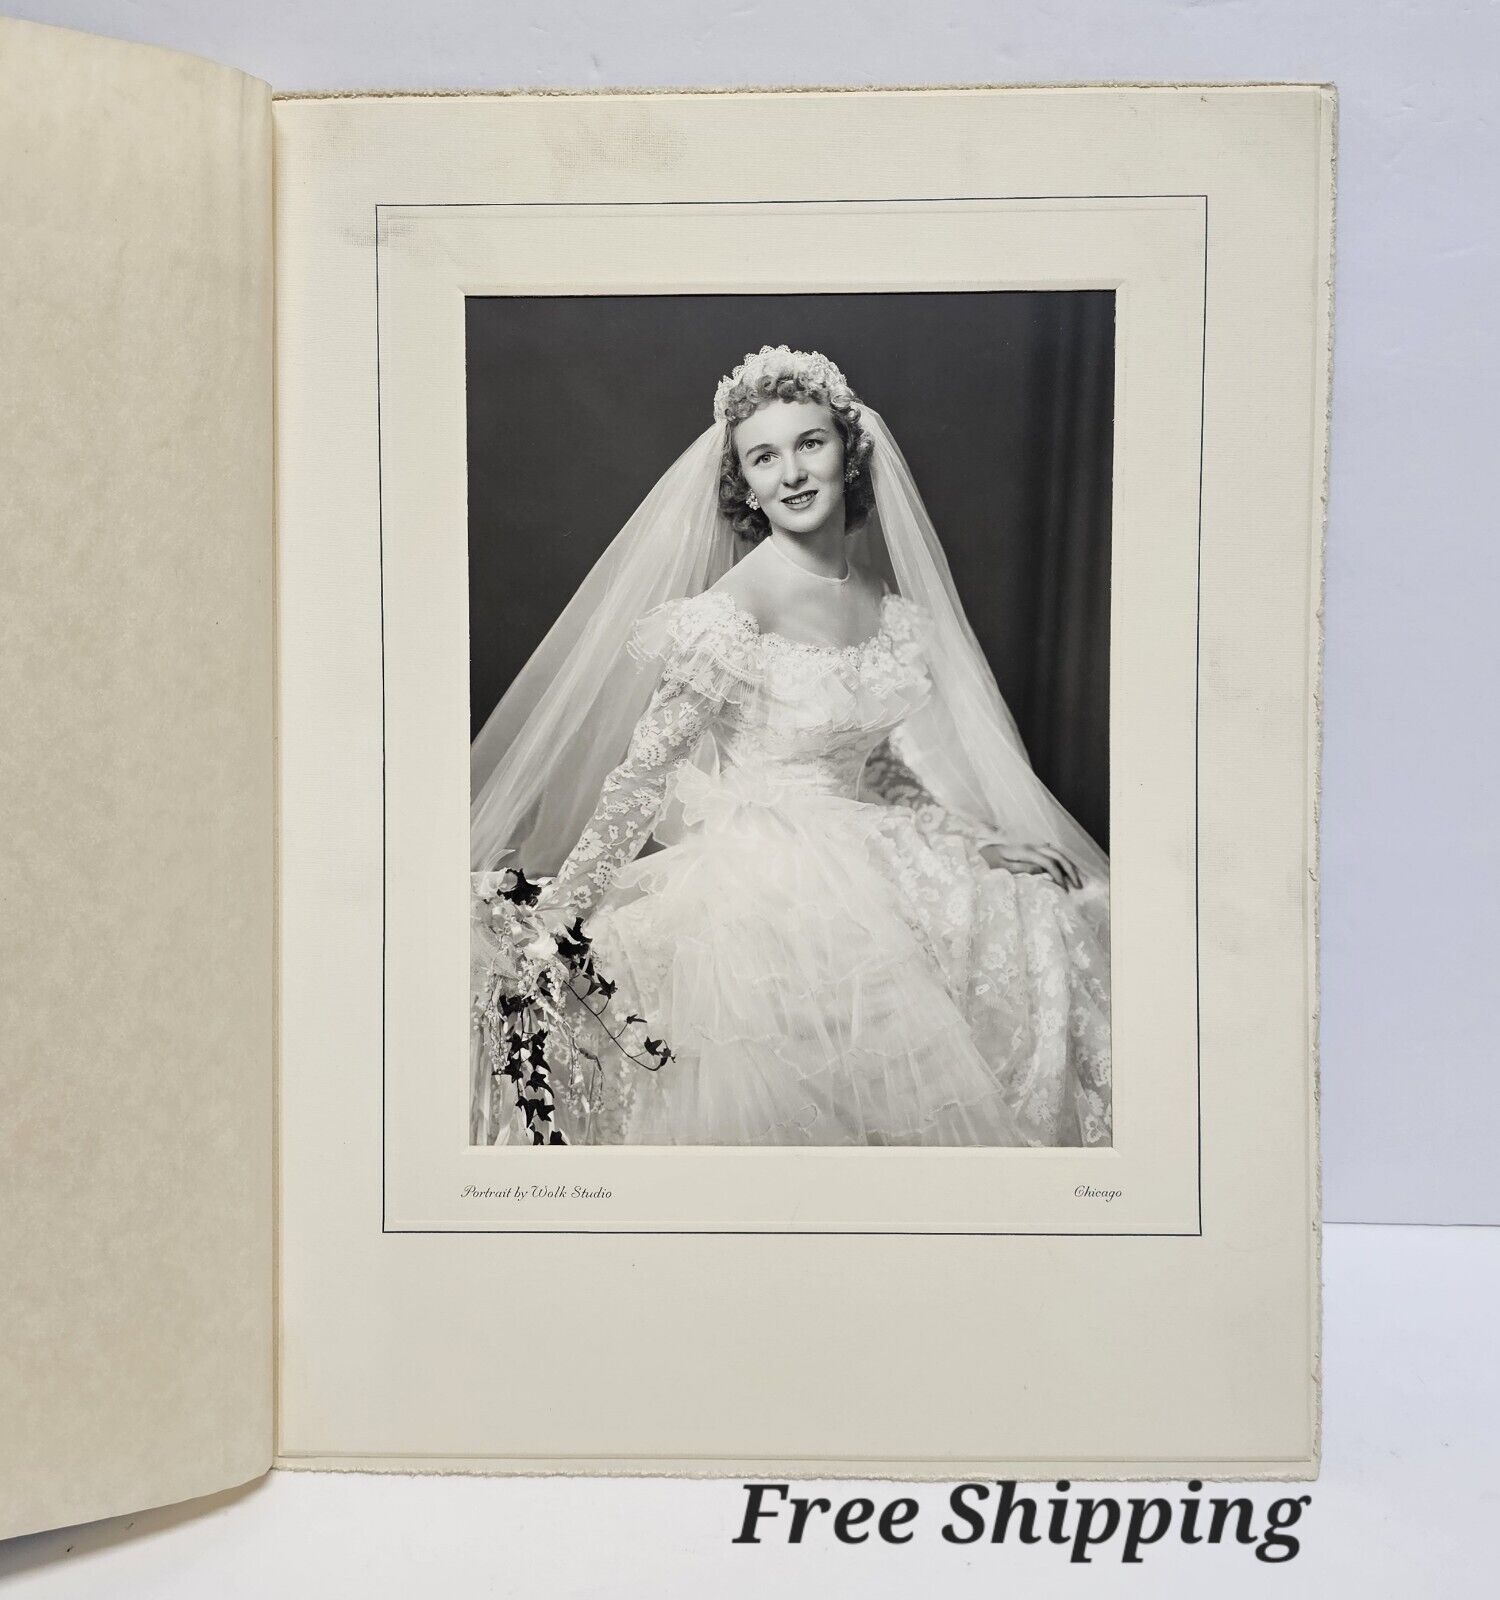 Lot of 5 Vintage Wedding Photos Snapshots Folder Mounted B&W Black & White  GC